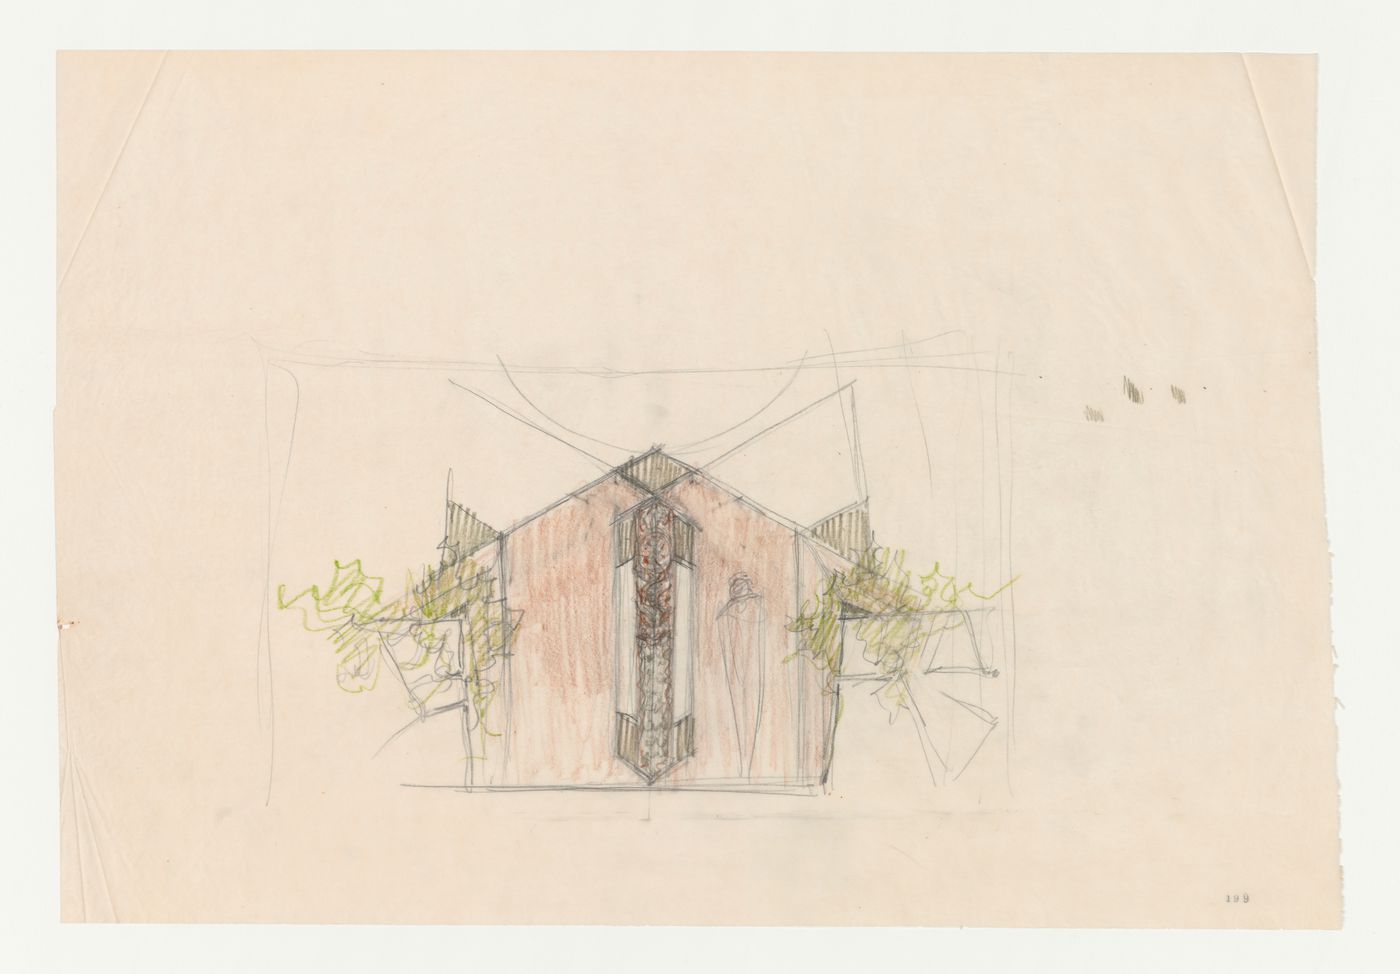 Wayfarers' Chapel, Palos Verdes, California: Sketch elevation for the entrance doors and doorframe, including berm wall planters